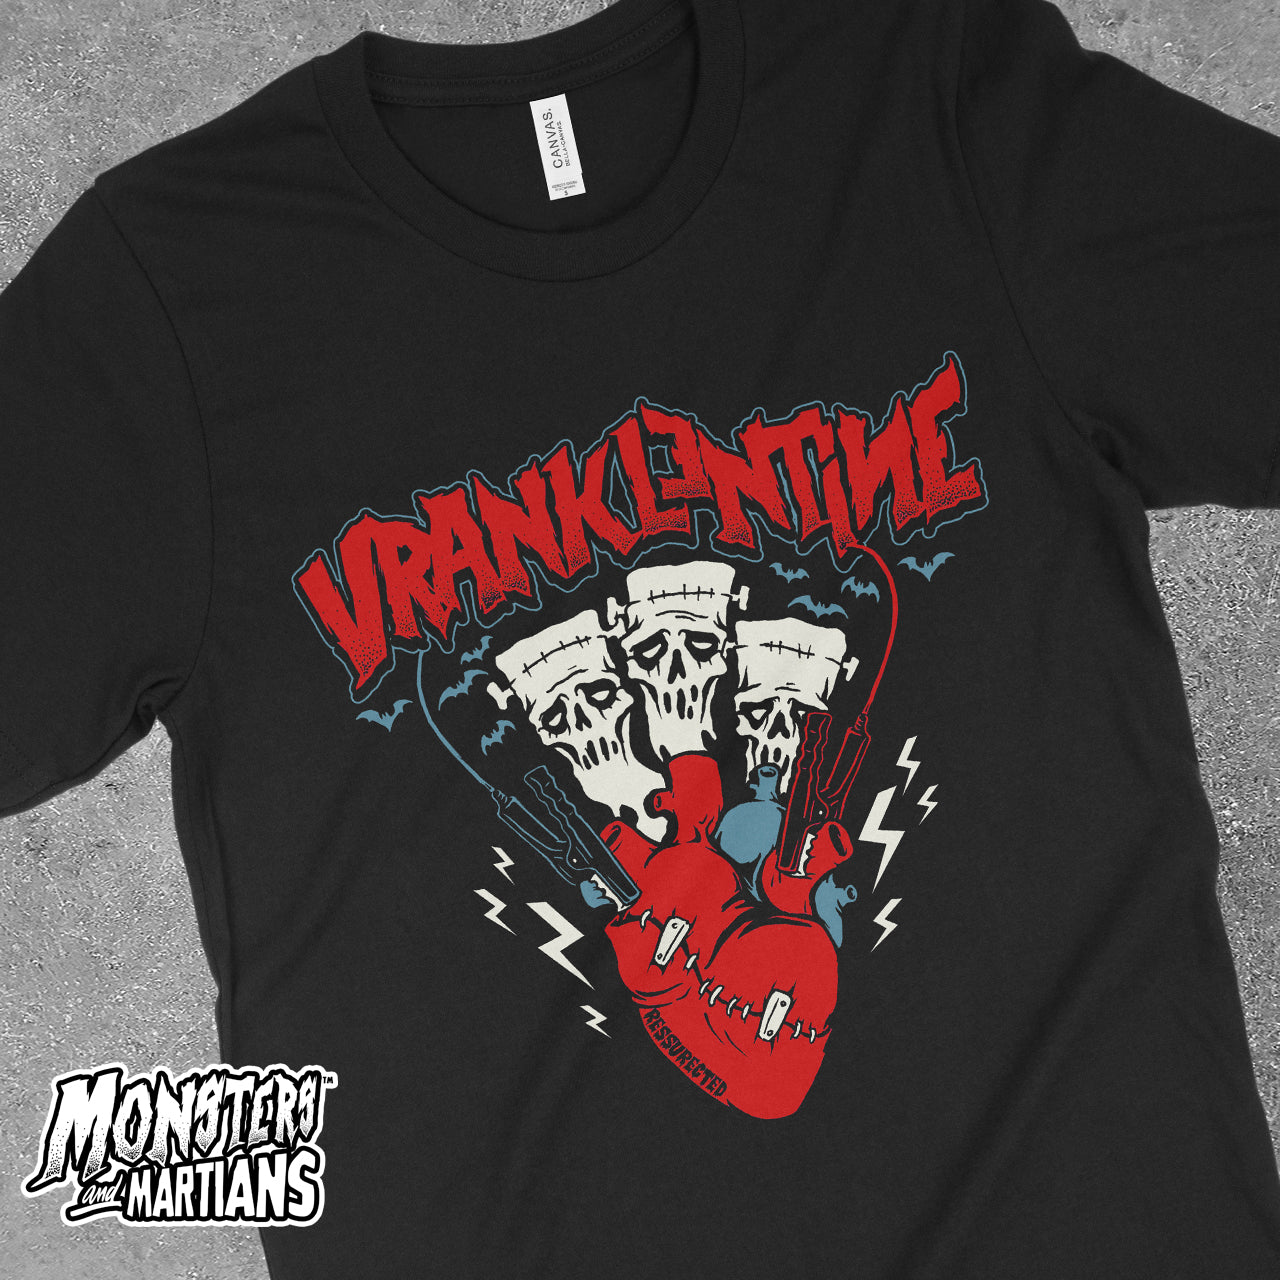 Frankenstein Valentine "Vranklentine" Horror Black Tee